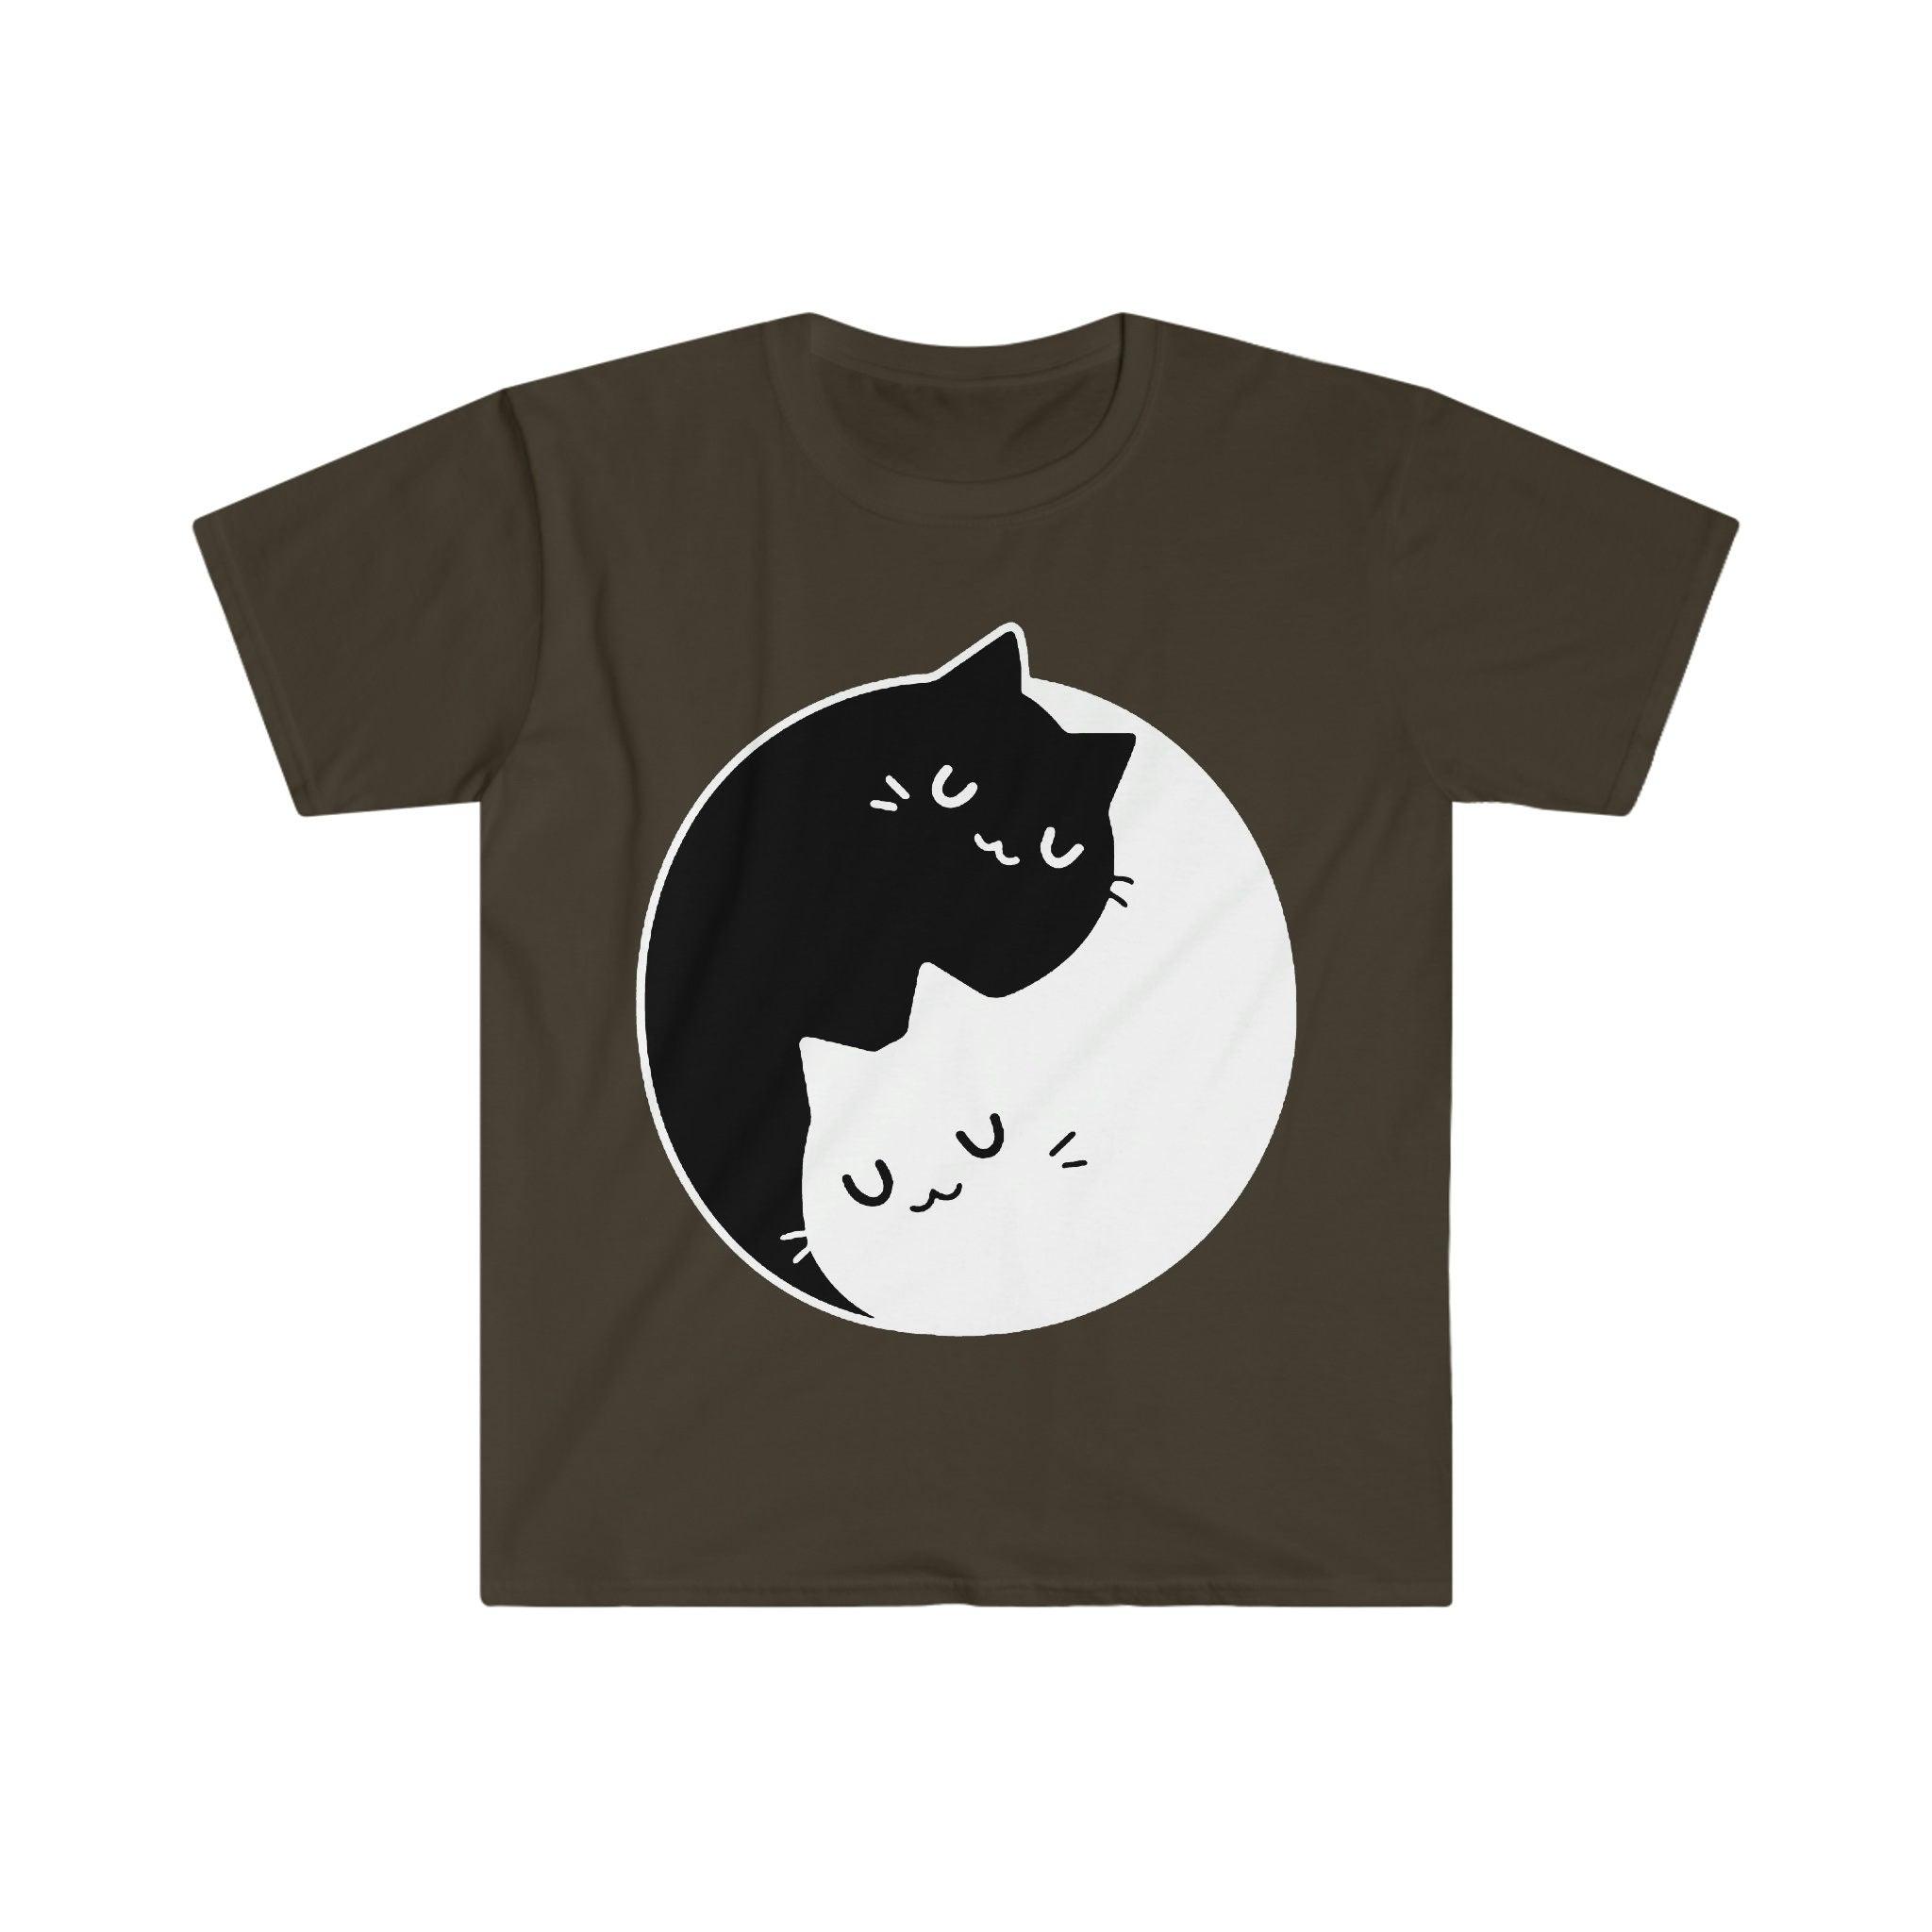 Yin Yang Cats T-shirts , Yin Yang Duality || Yin Yang kettir || Fullkomin gjöf - SML Xl - Dömur, karlar Unisex || Bff Par gjafahugmyndir, Cat Mom Tee, tees - plusminusco.com